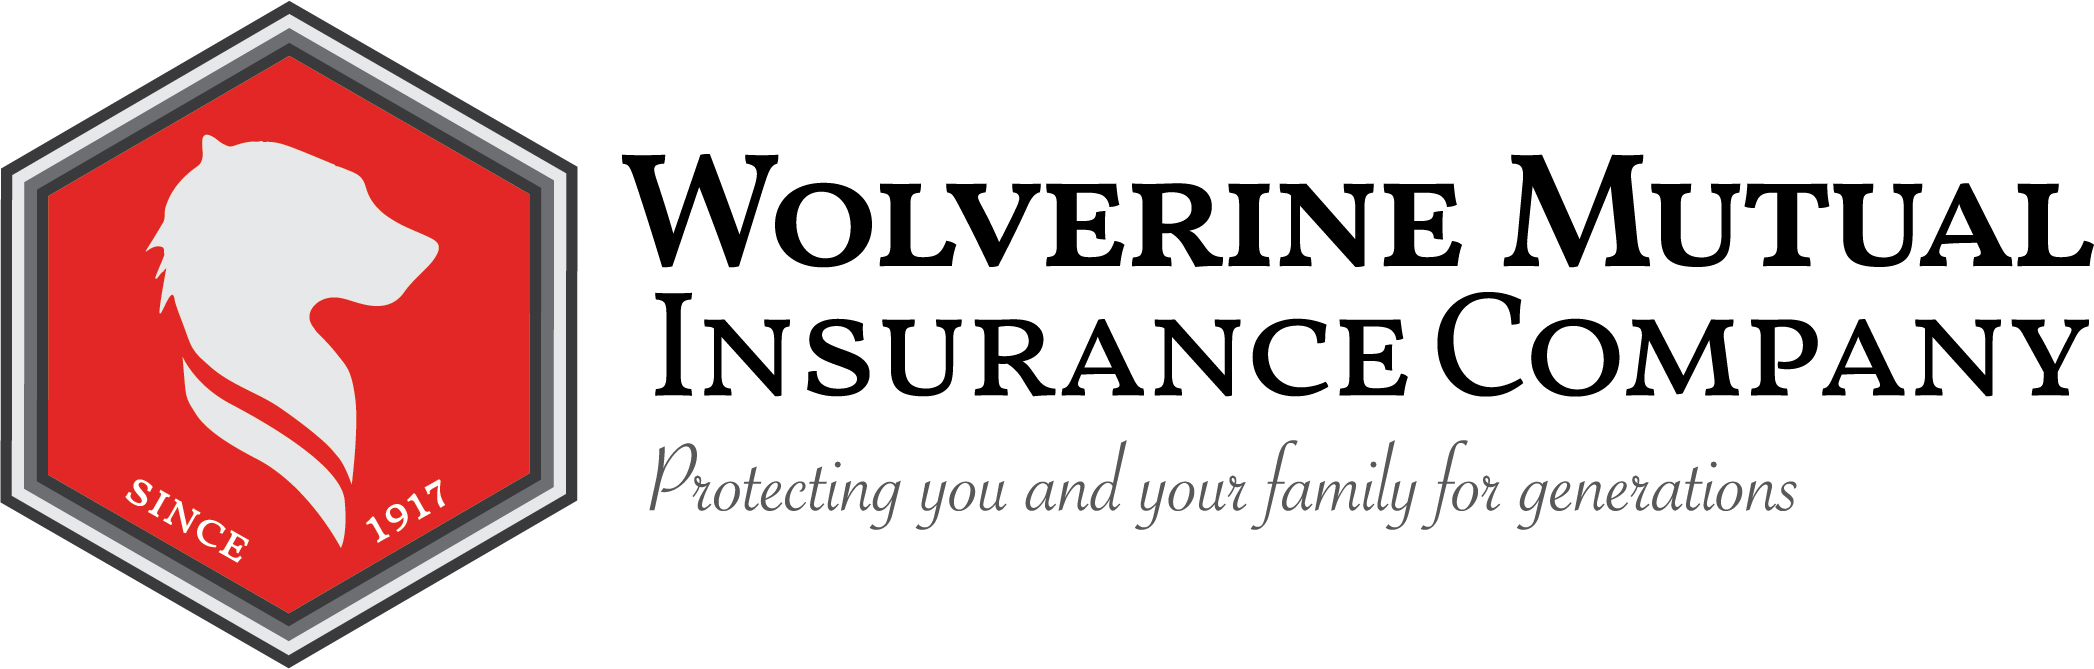 Wolverine Mutual Insurance Company